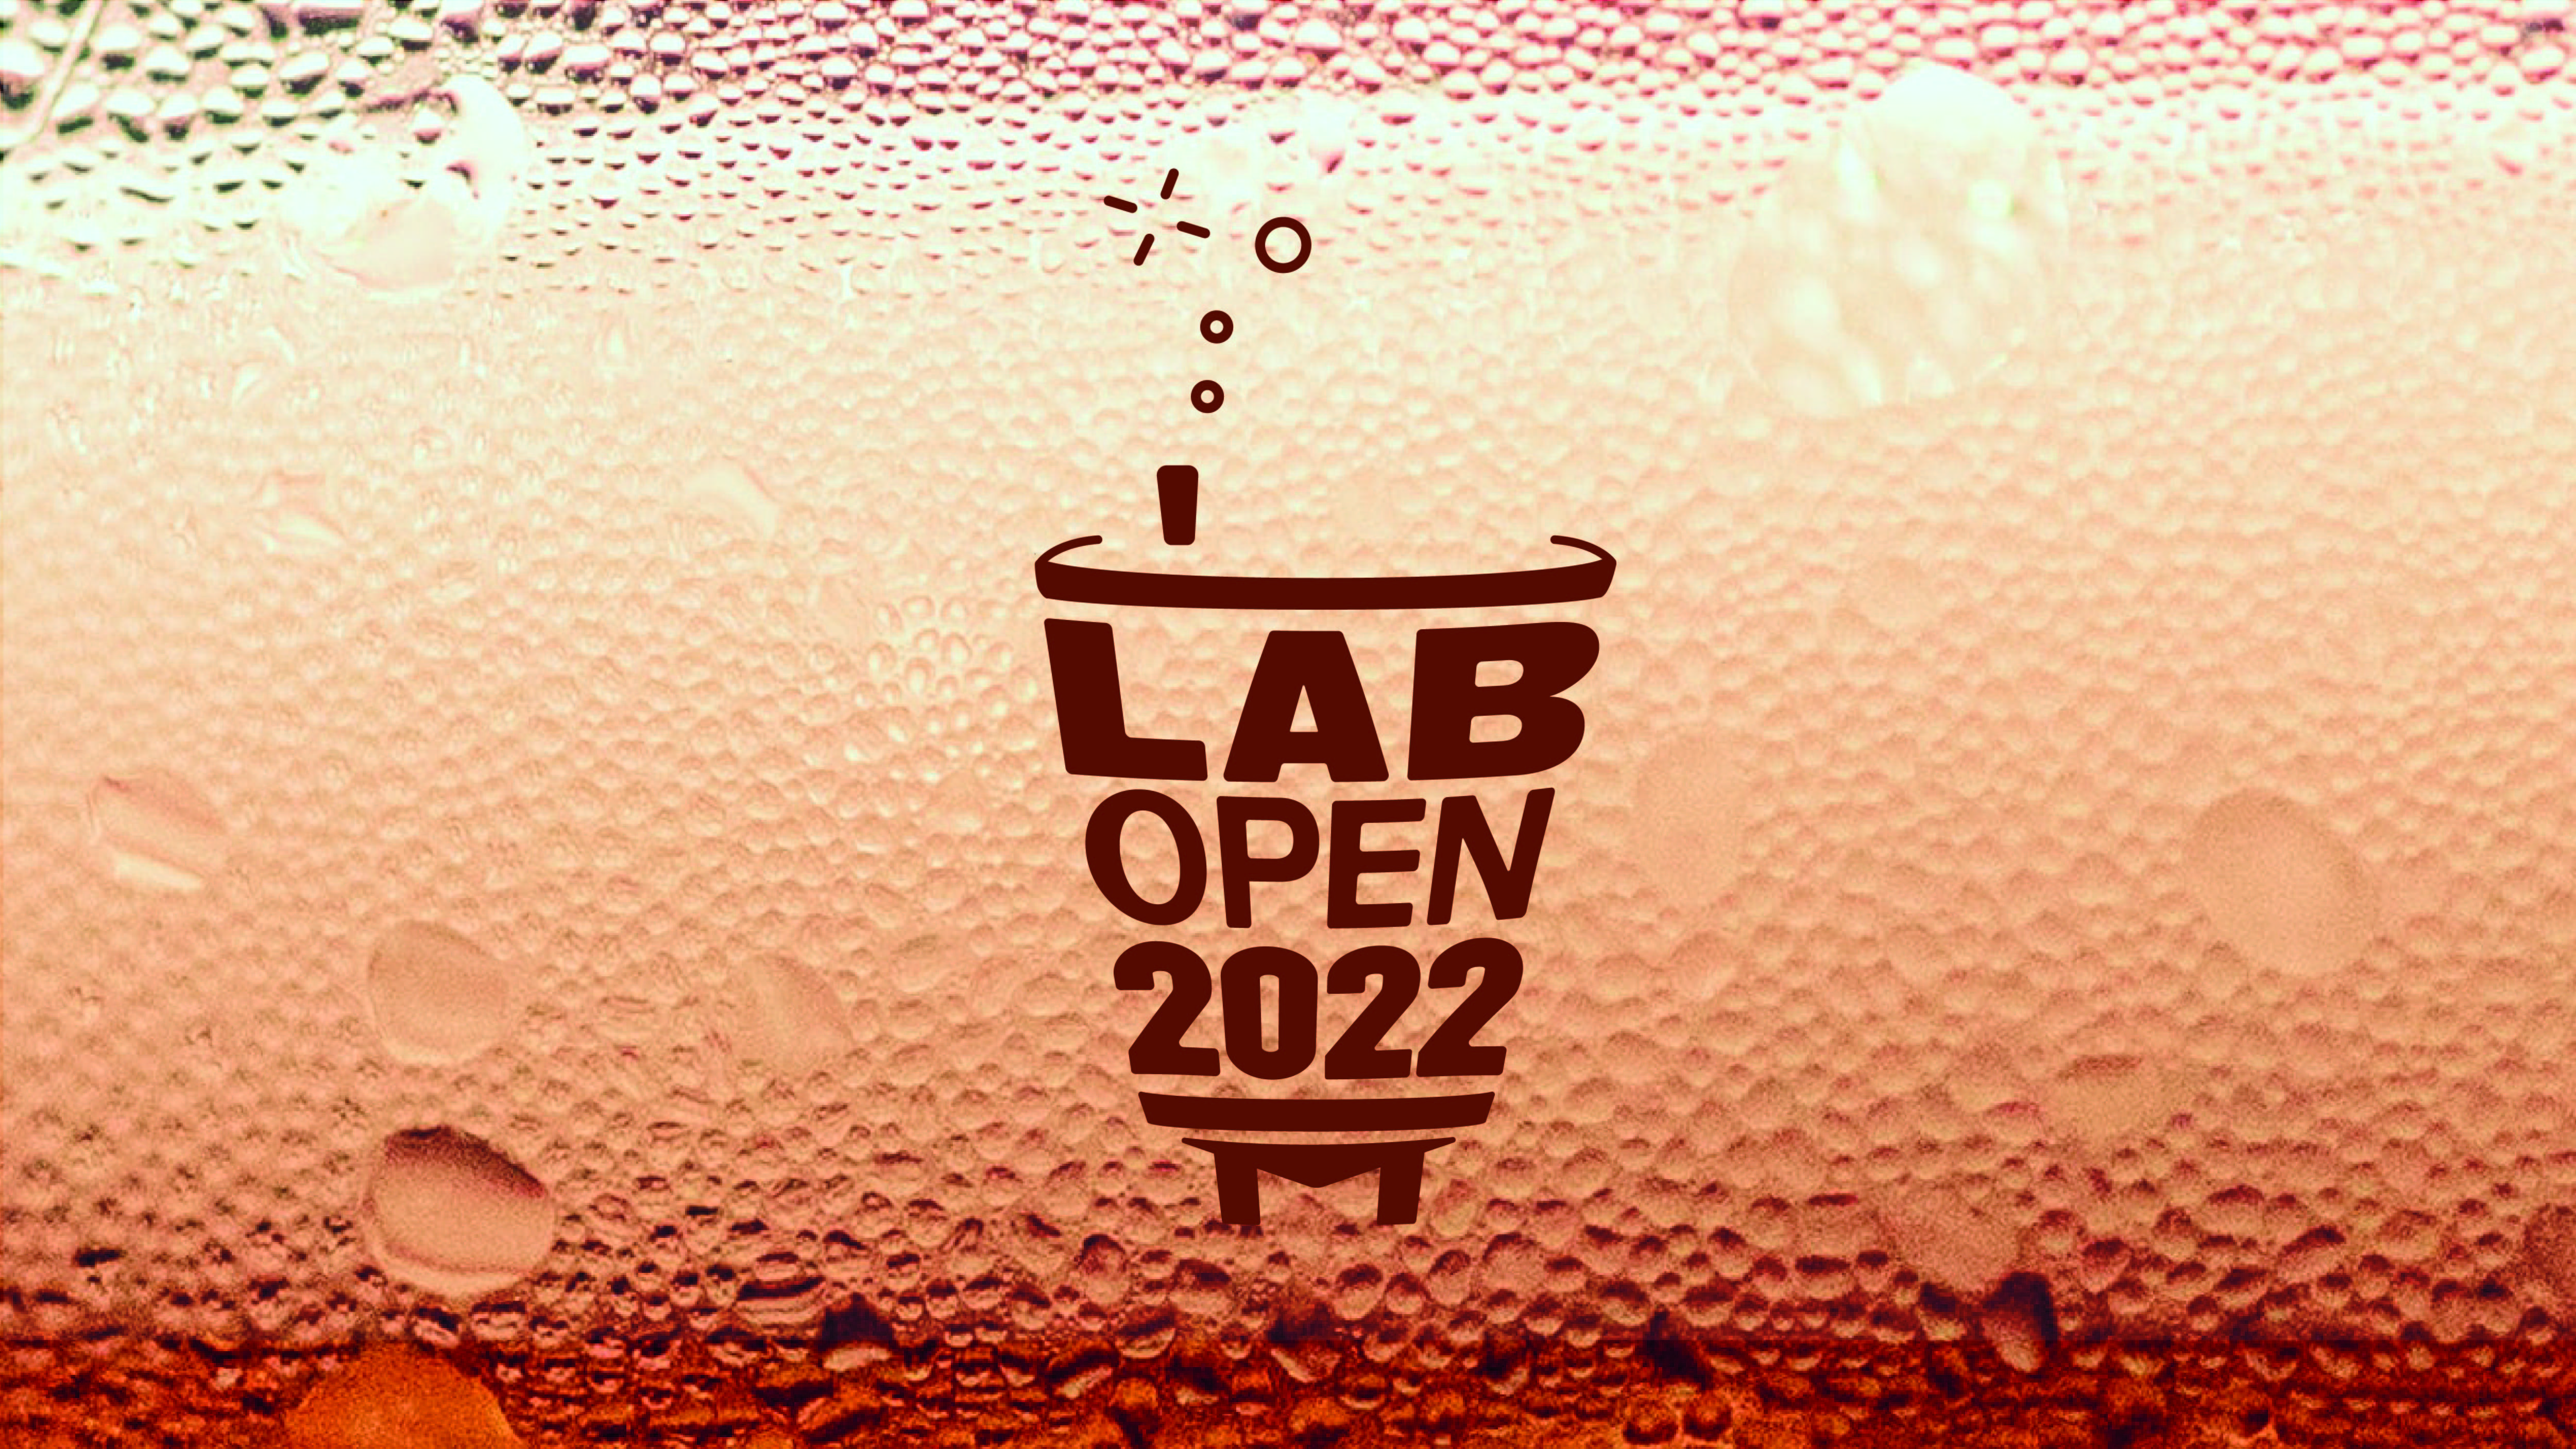 LAB Open 2022